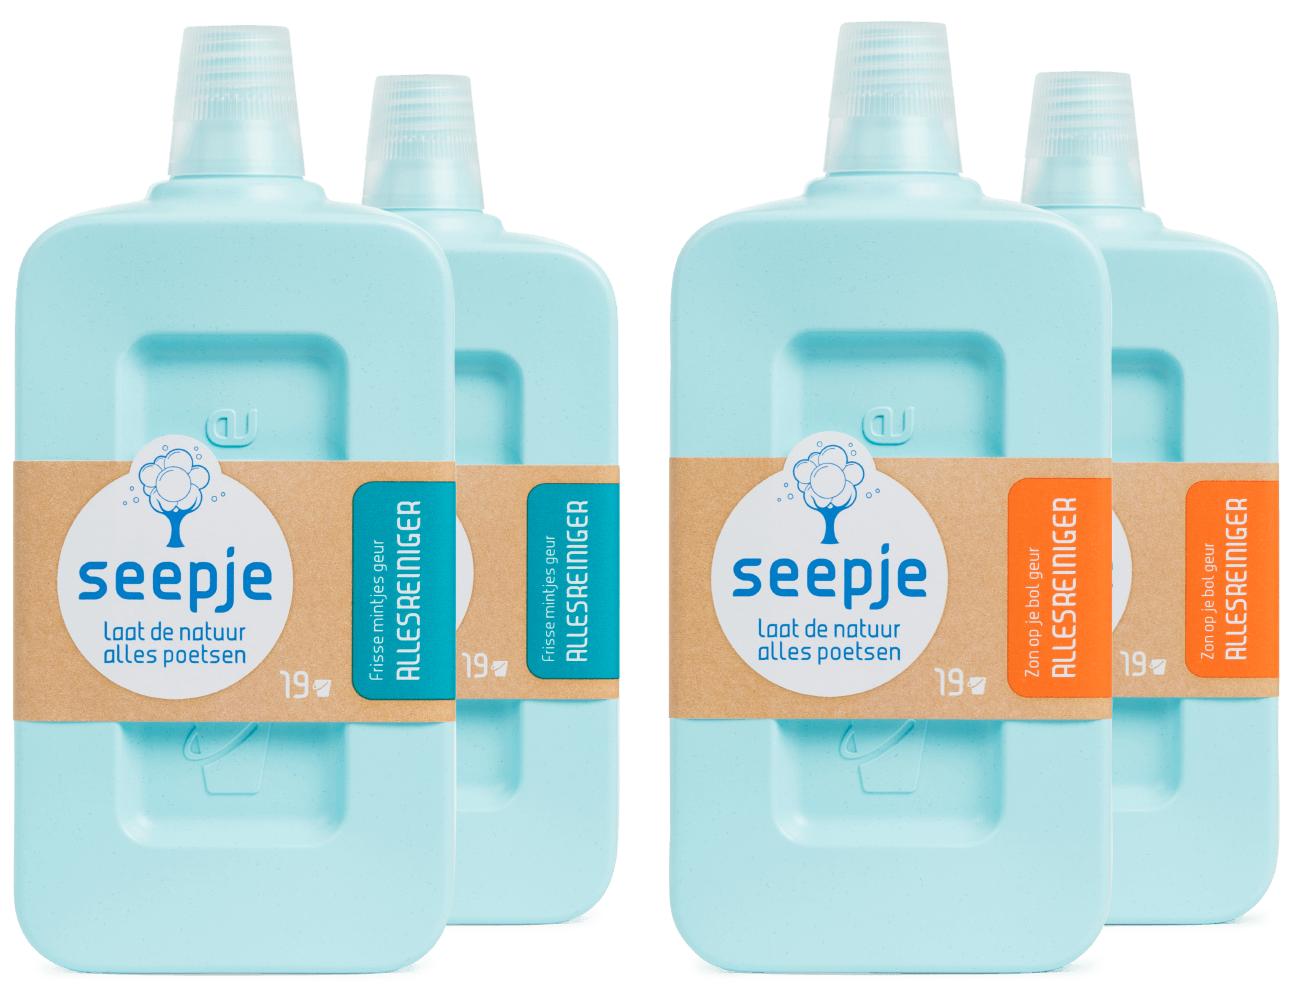 Best of seepje all-purpose cleaner bundle